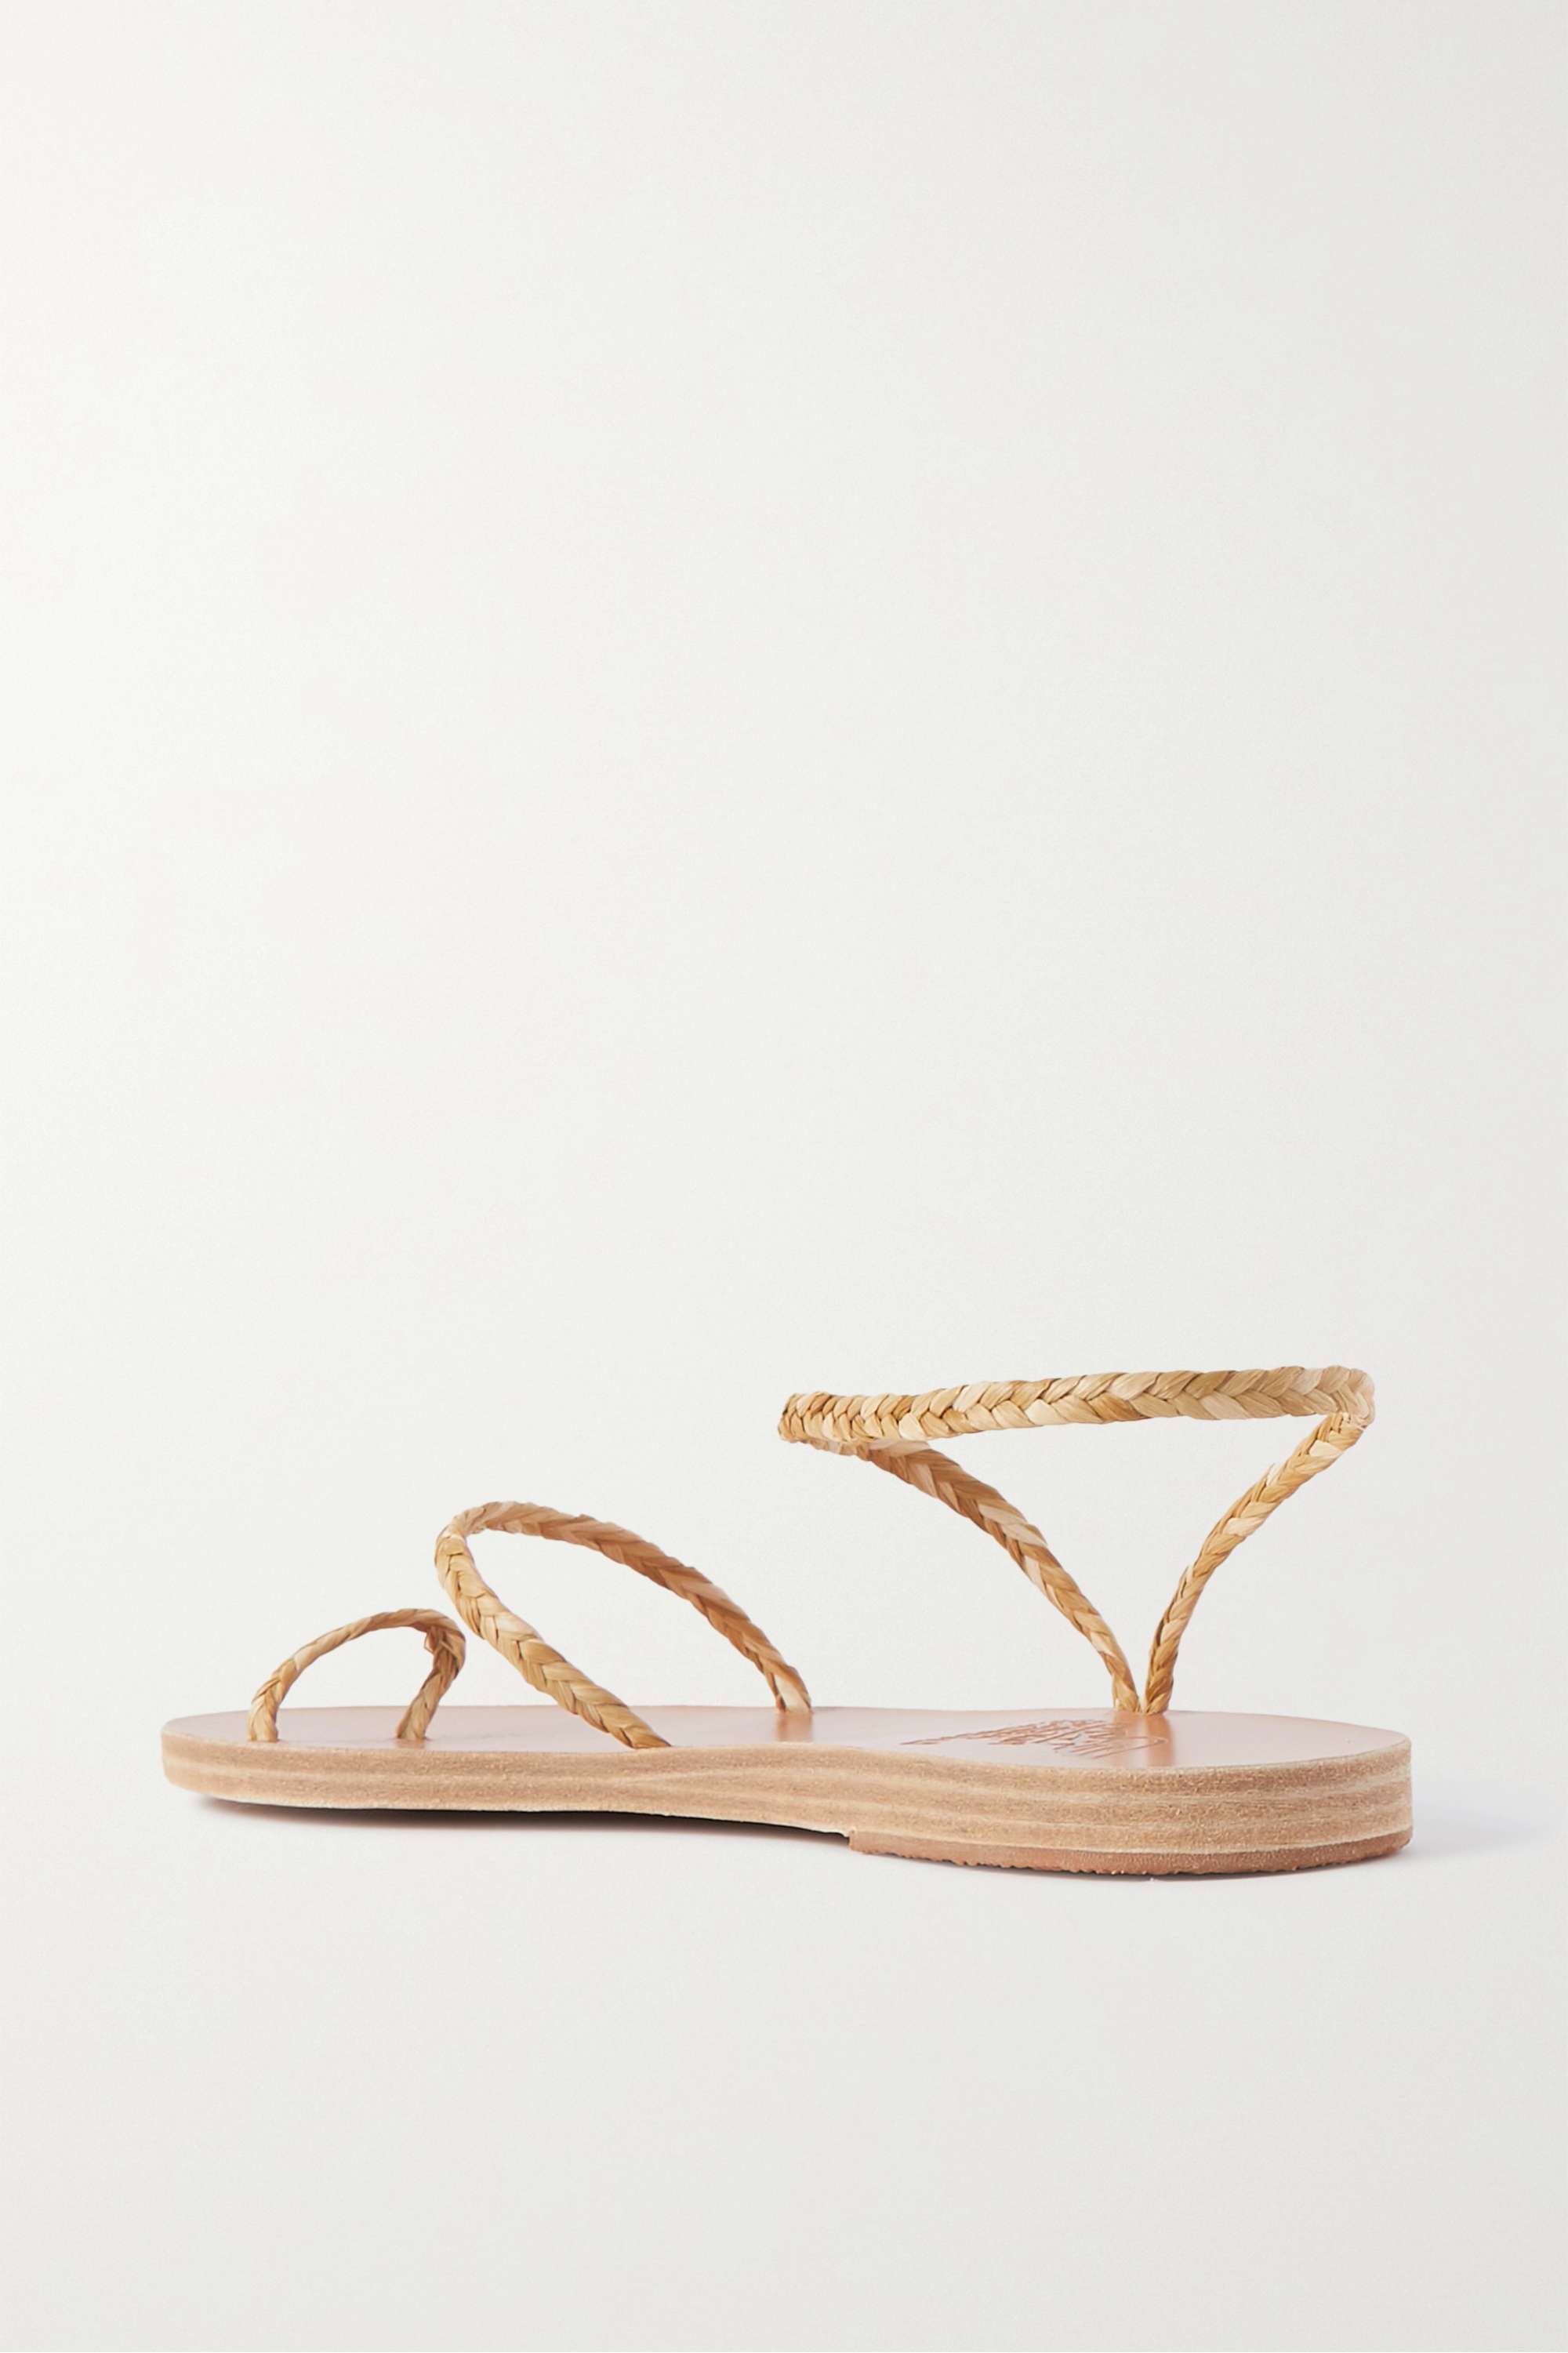 ANCIENT GREEK SANDALS плетеные сандалии Eleftheria из рафии, золото тайские сандалии off white ancient greek sandals